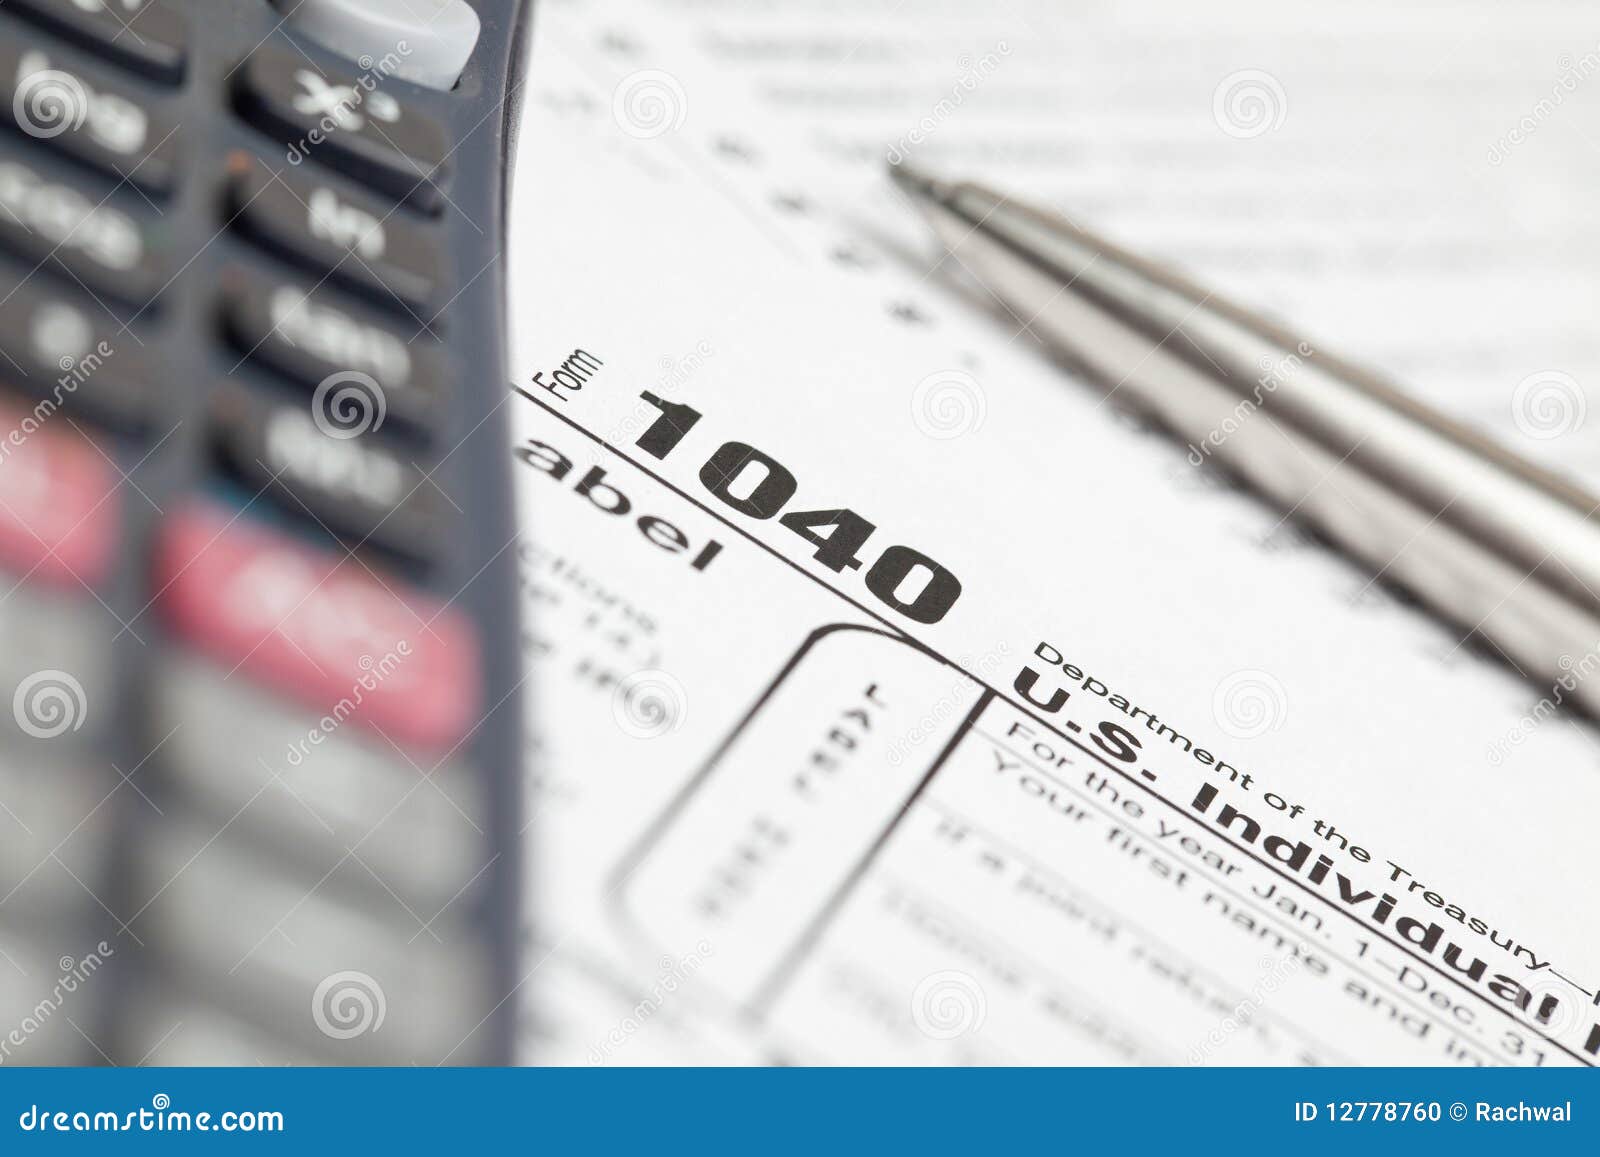 1040 Tax Form. Filling federal individual tax return forms